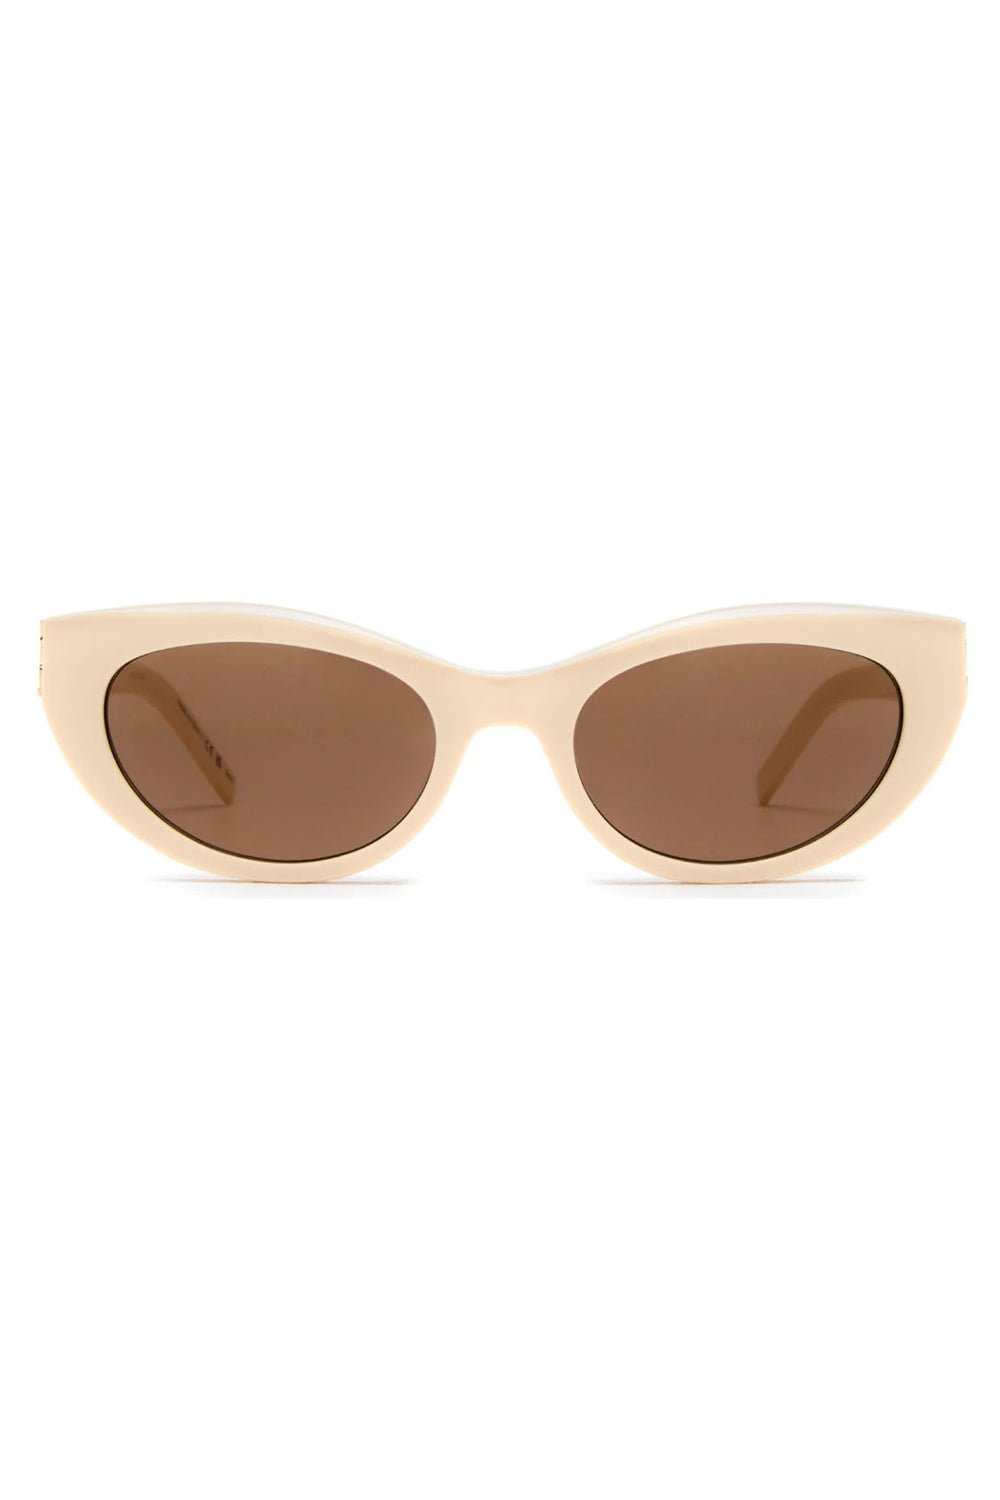 SAINT LAURENT-Acetate Cat-Eye Sunglasses-IVORY/IVORY/BROWN